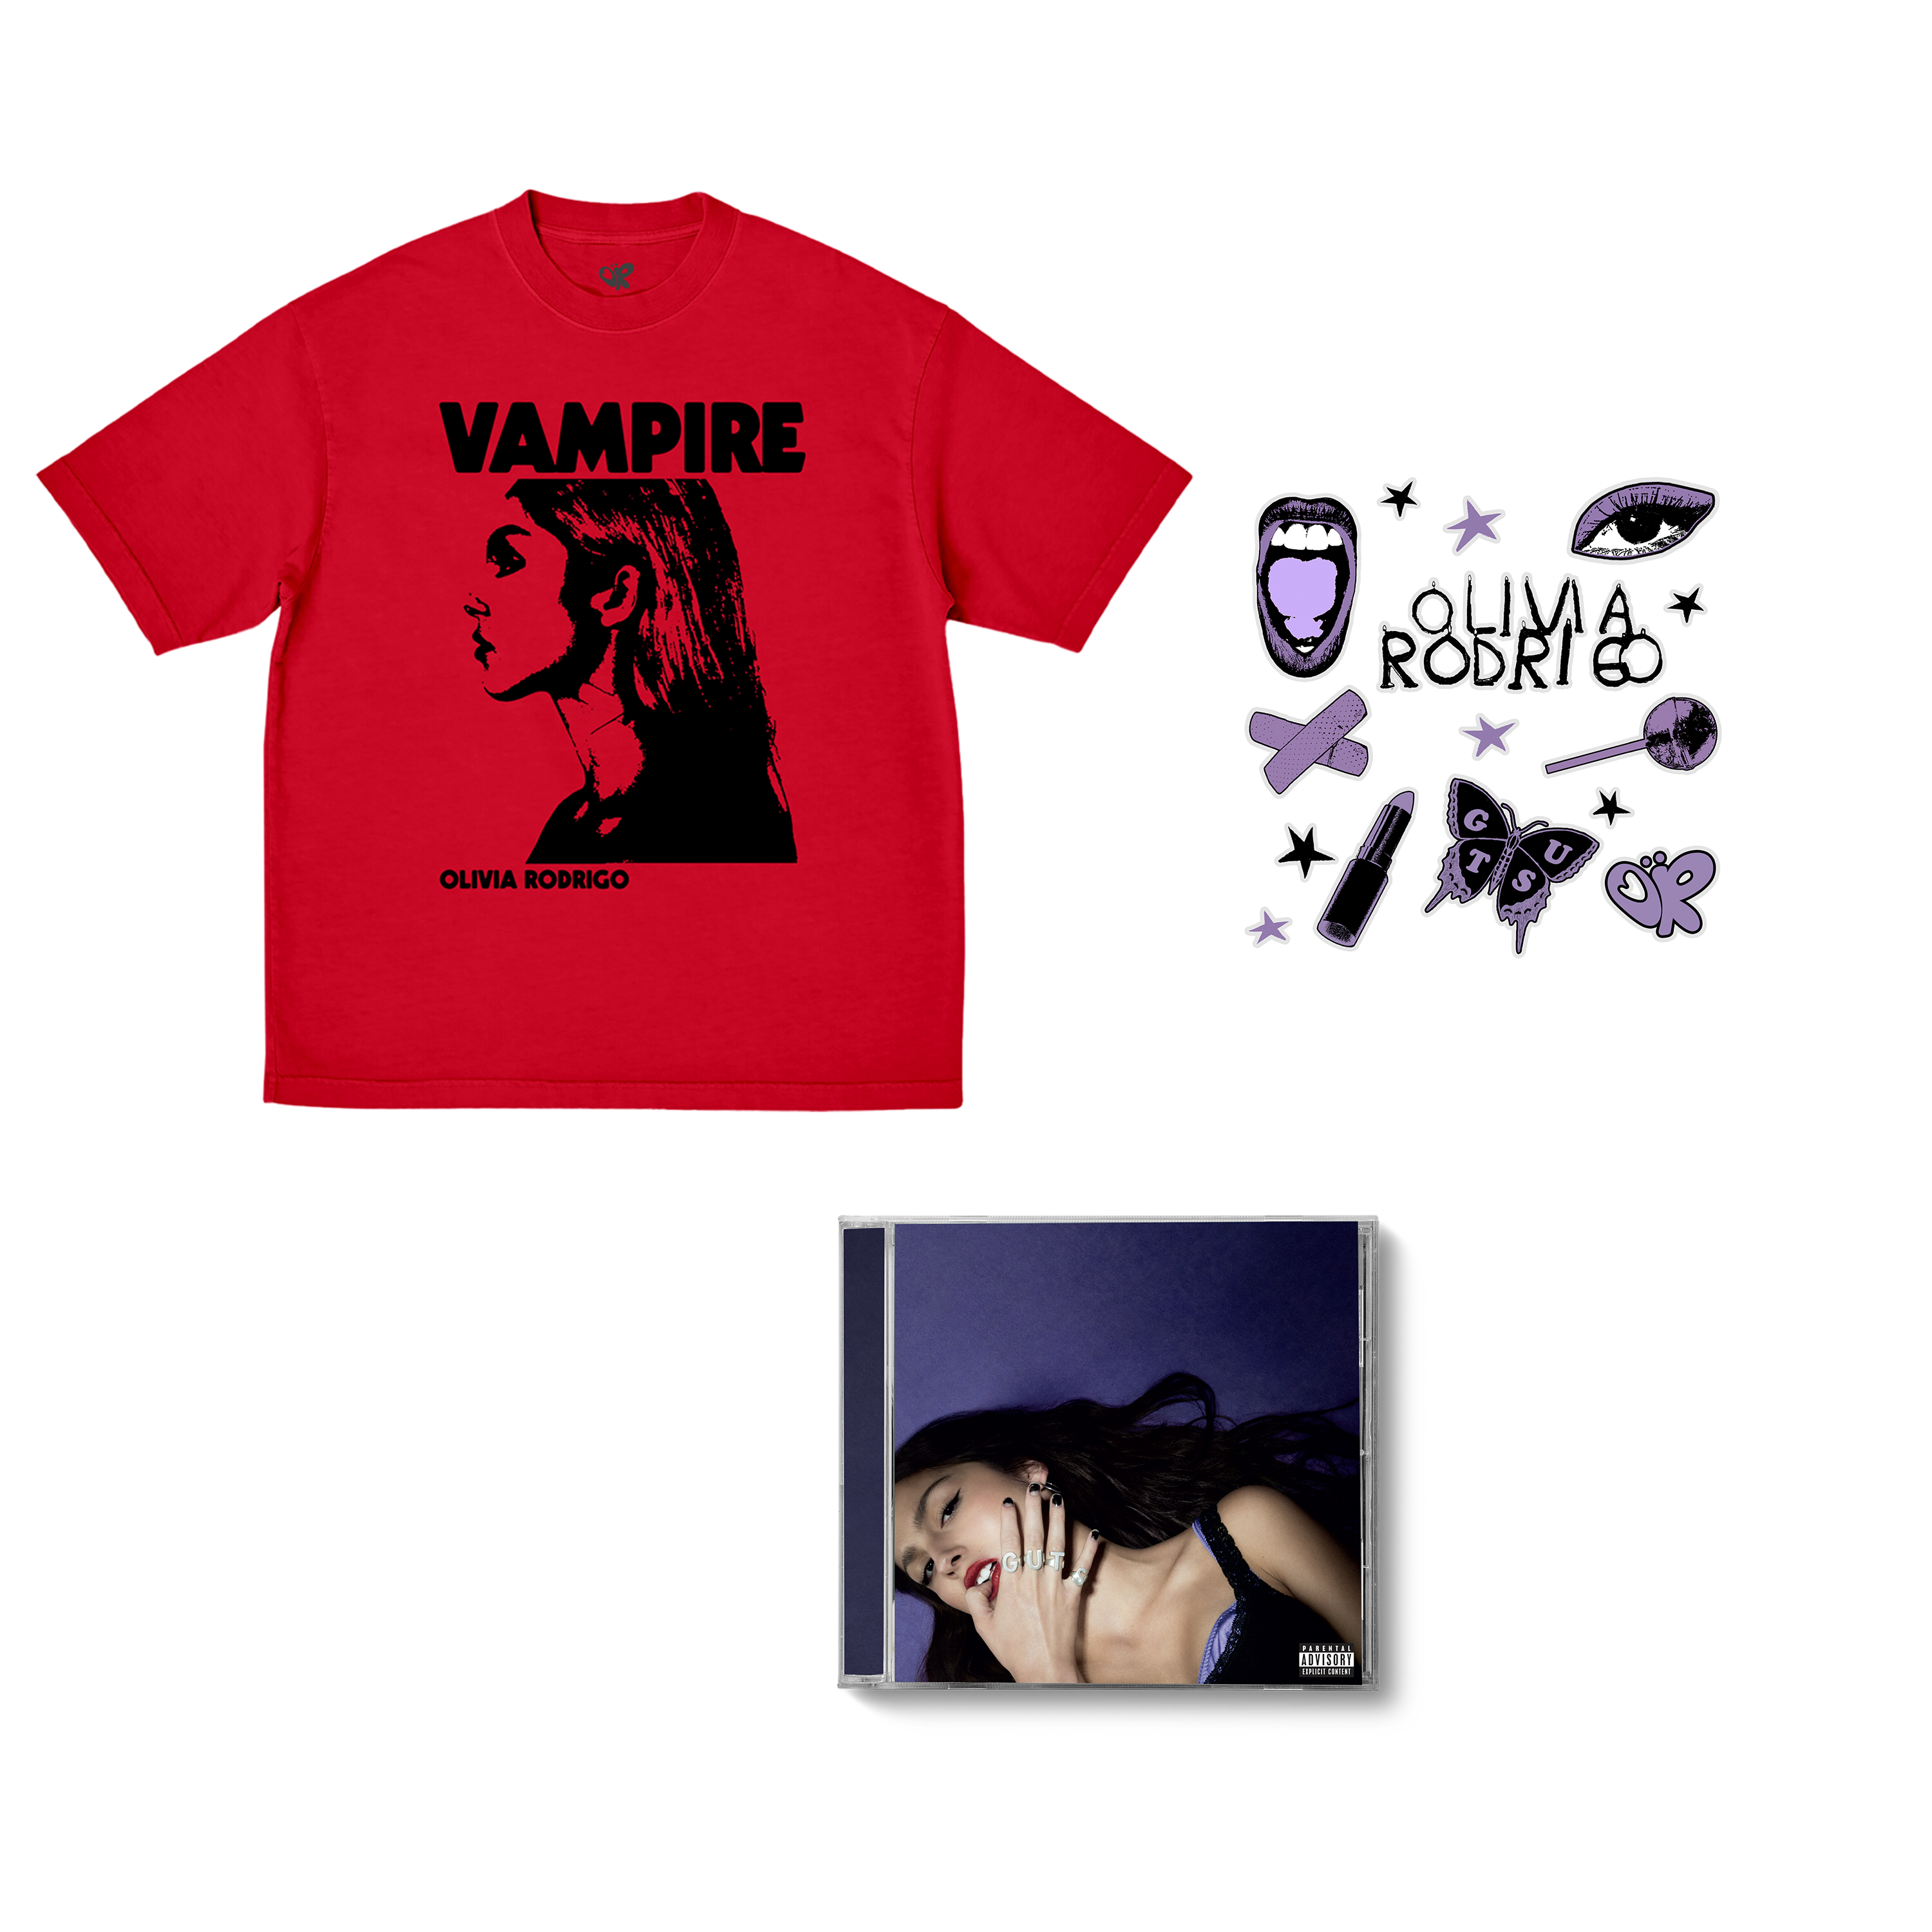 Olivia Rodrigo - GUTS - CD+ Camiseta Vampire + Stickers –